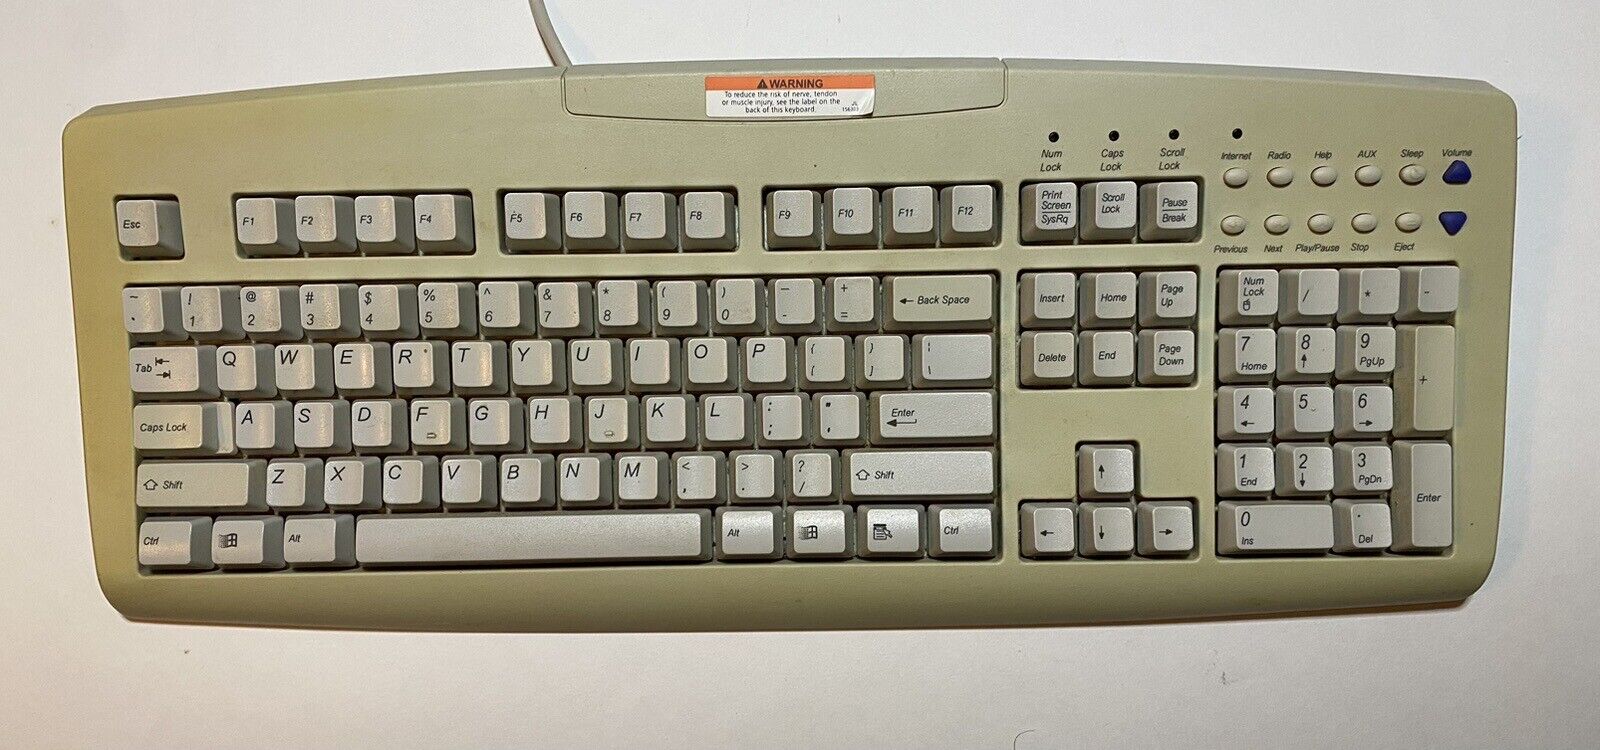 PS/2 Keyboard Mechanical Keyboard Clicky Vintage Keyboard Tested Model SK-1300